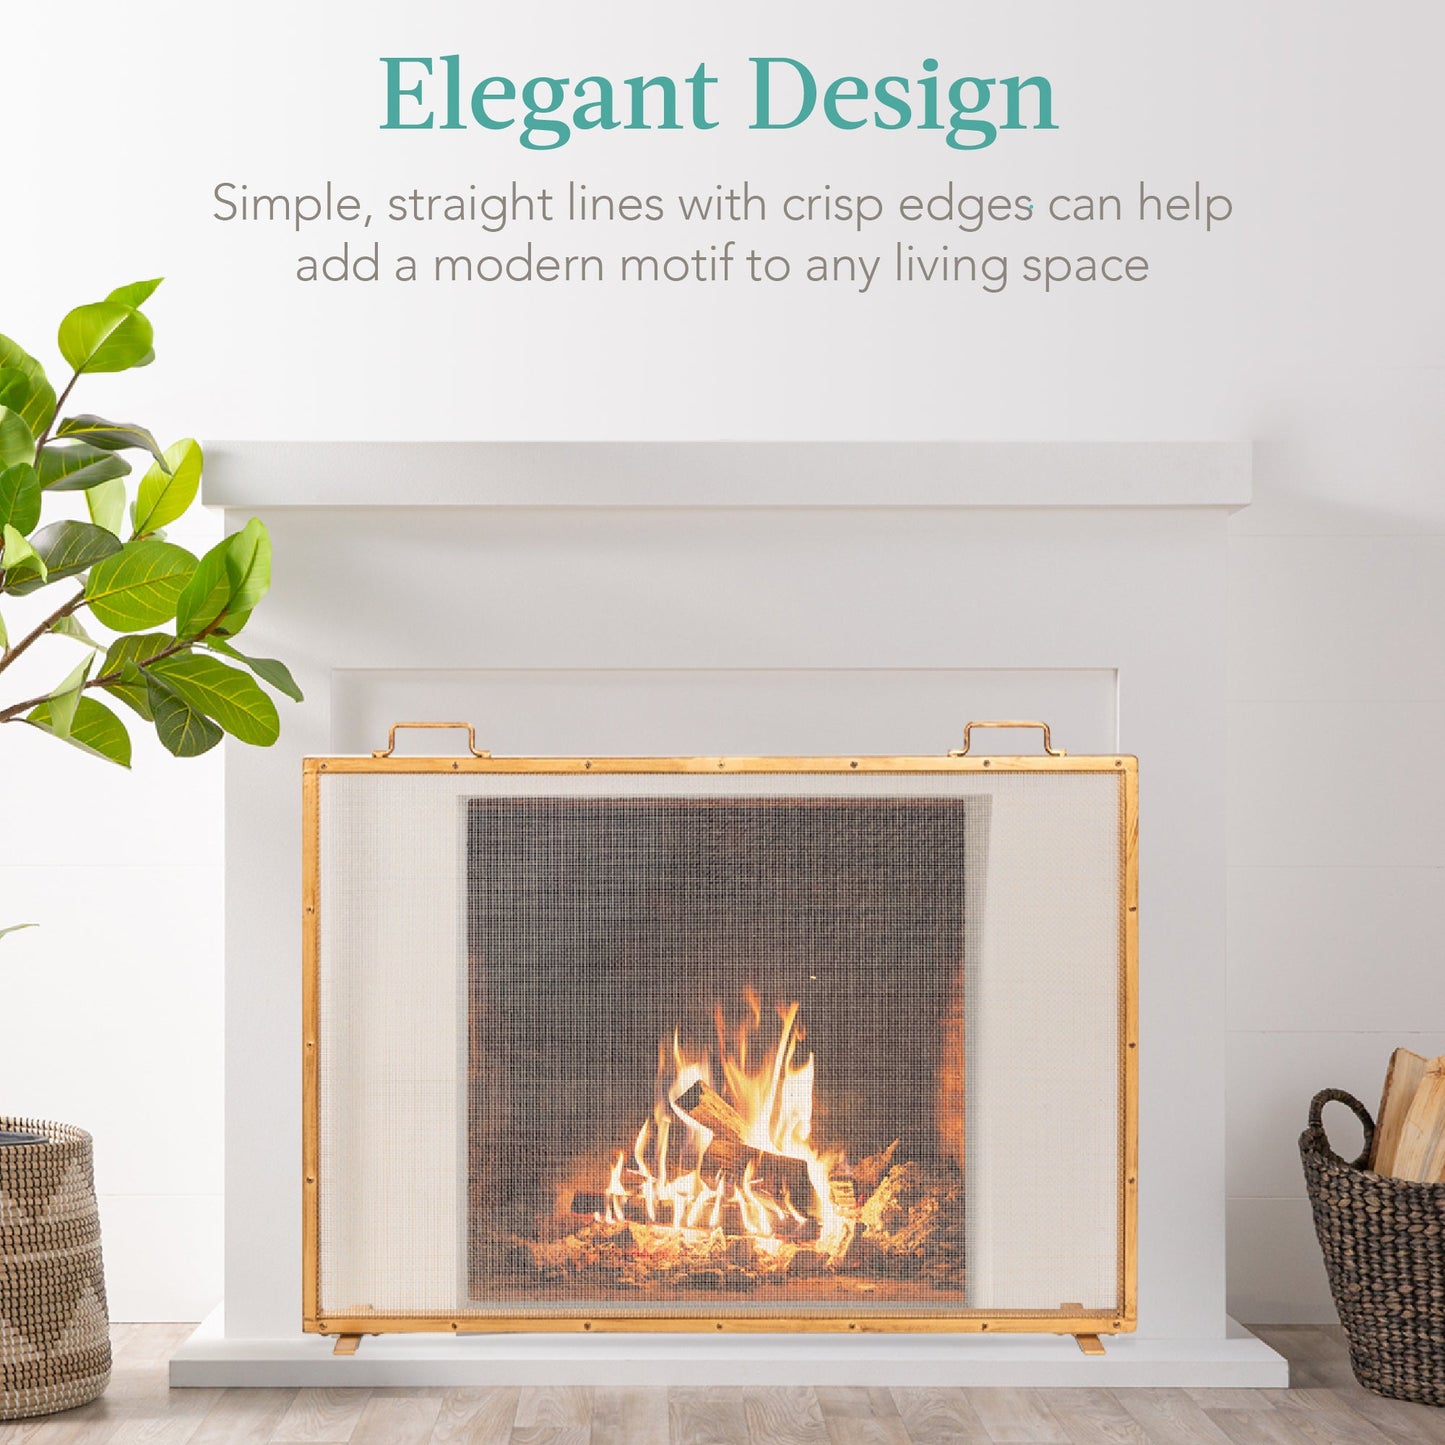 Single Panel Handcrafted Steel Mesh Fireplace Screen w/ Handles - 38x27in